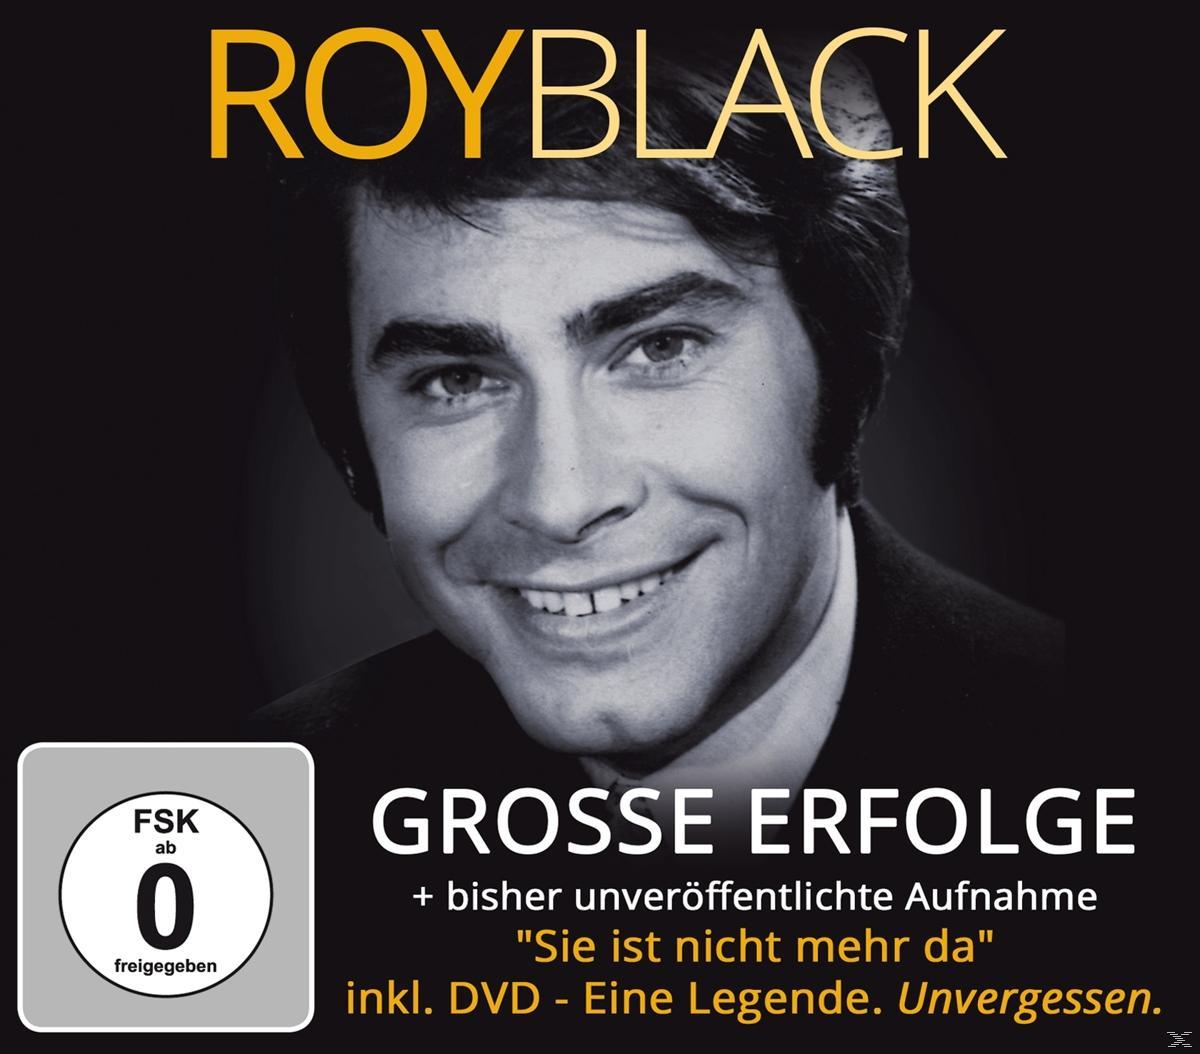 Roy - Black (CD) - DVD: Große Legende. Erfolge-inkl Eine Unvergessen.